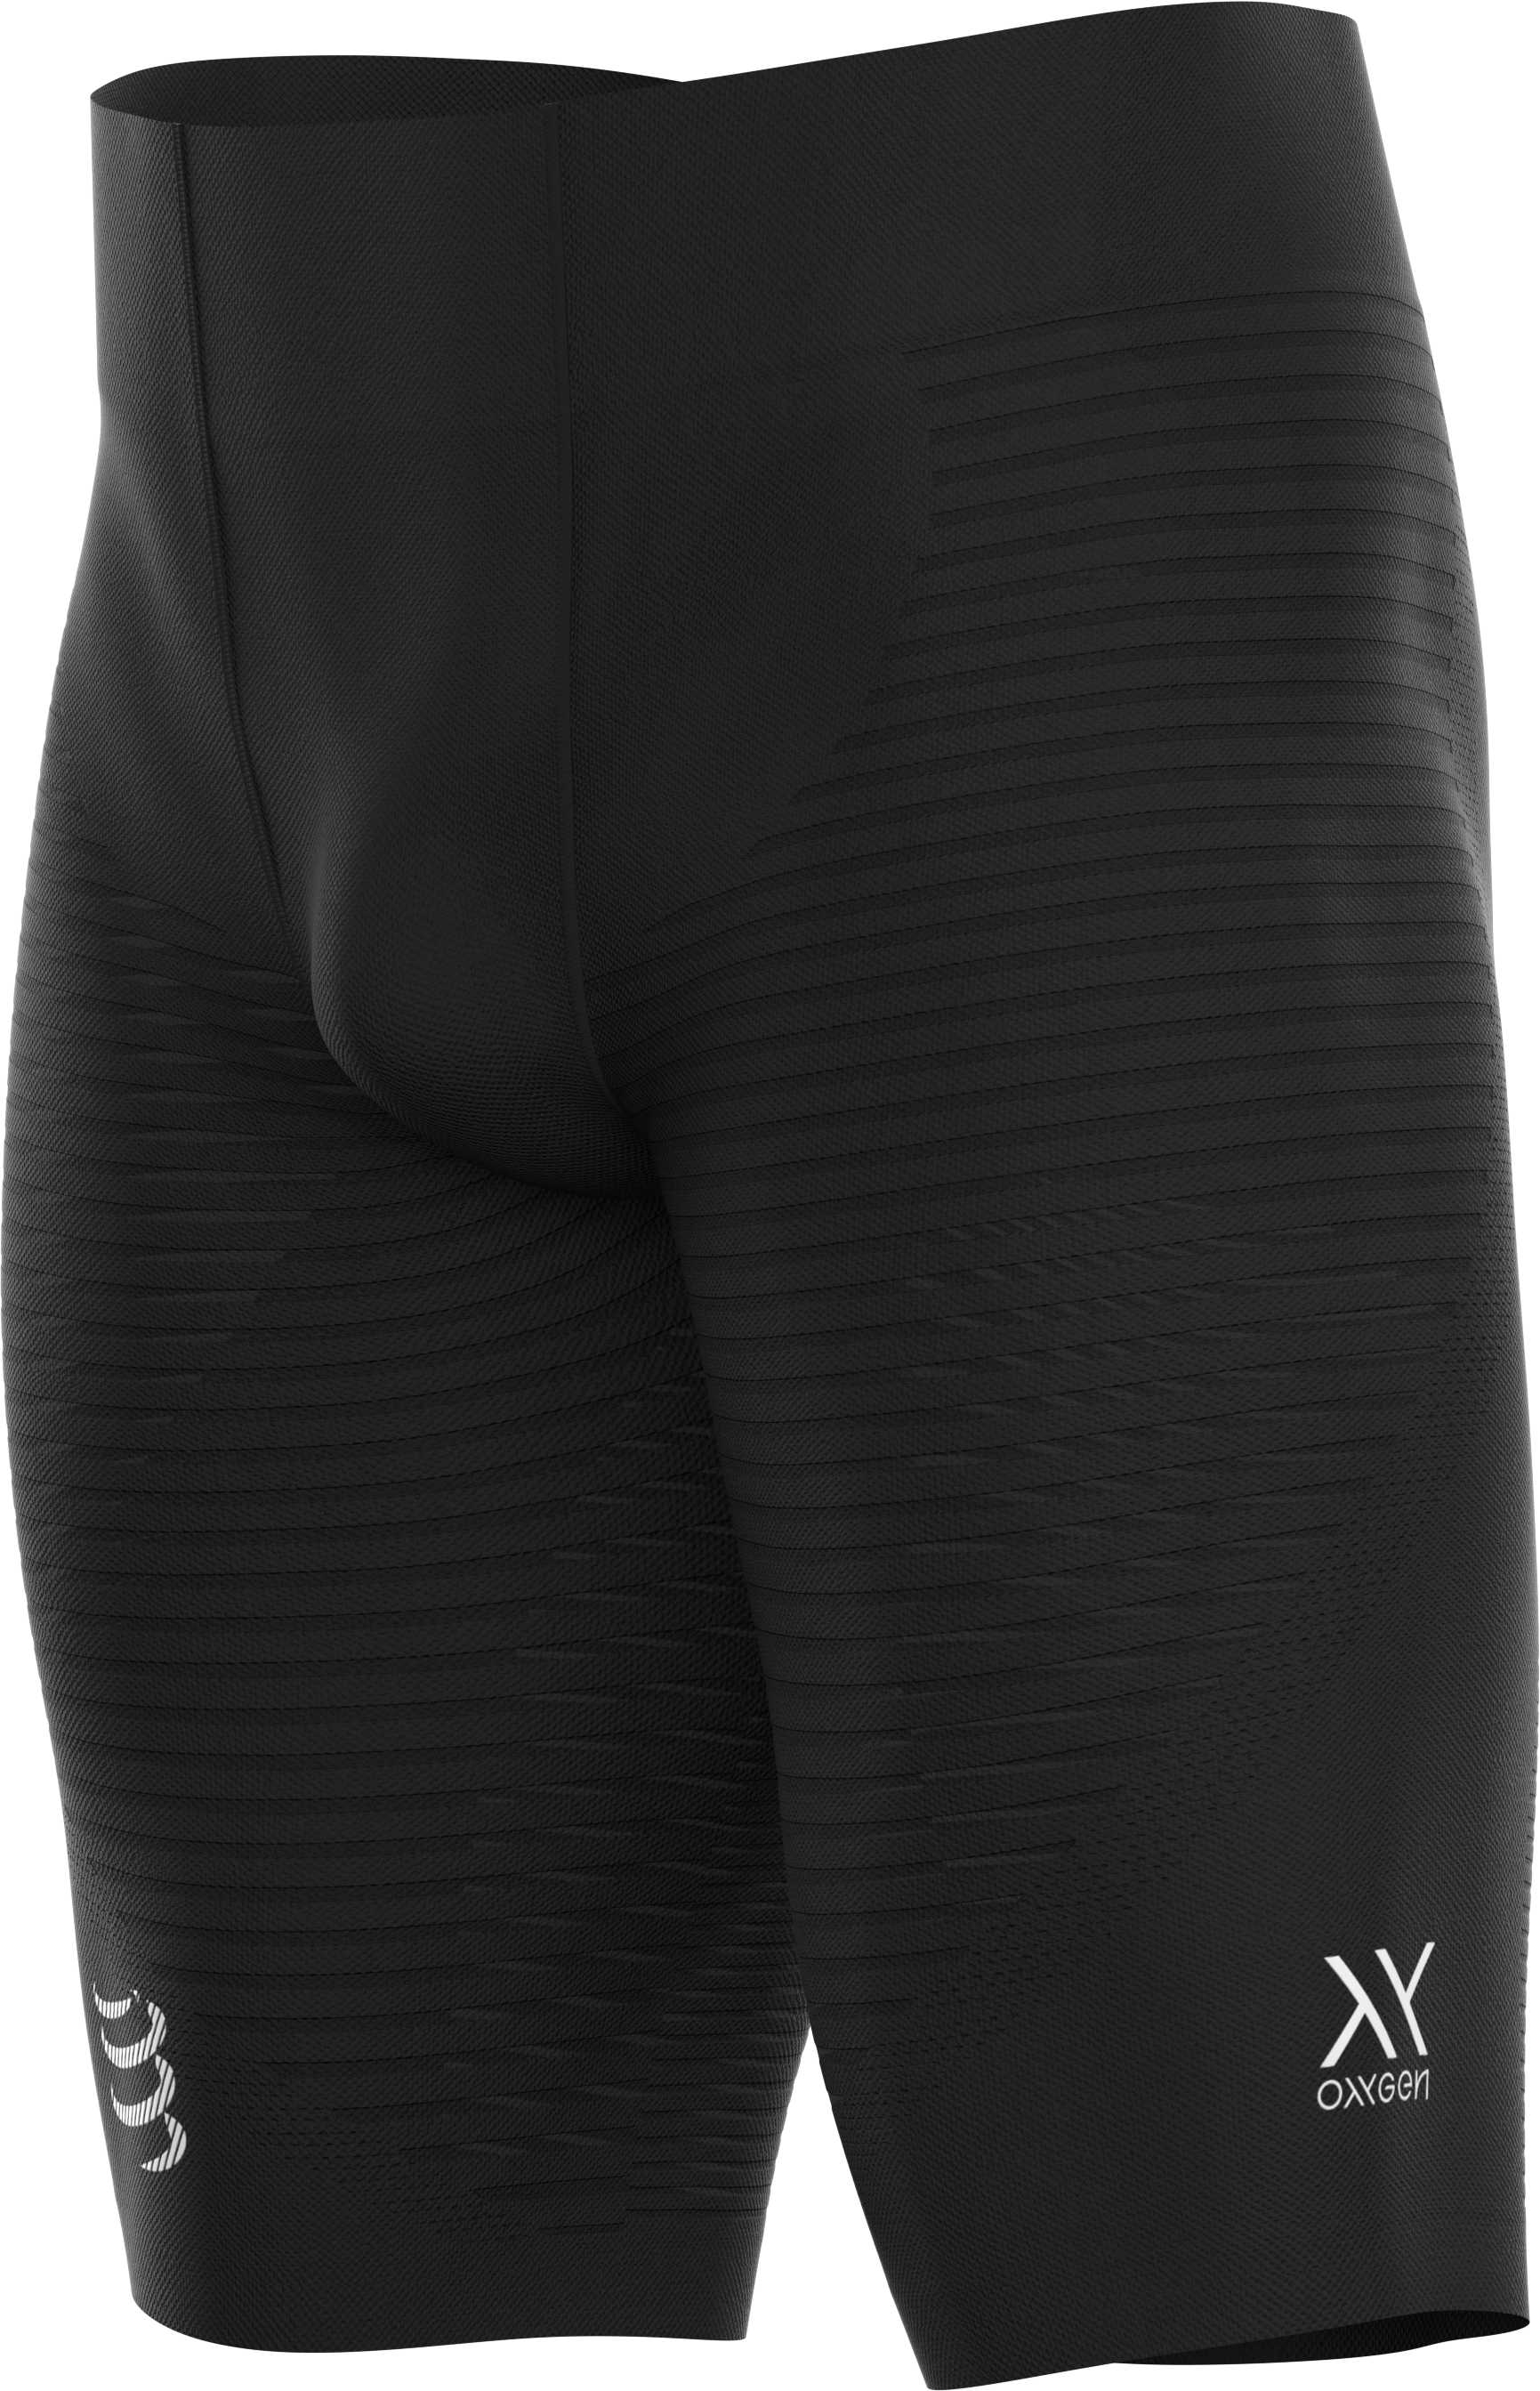 Men’s compression running shorts